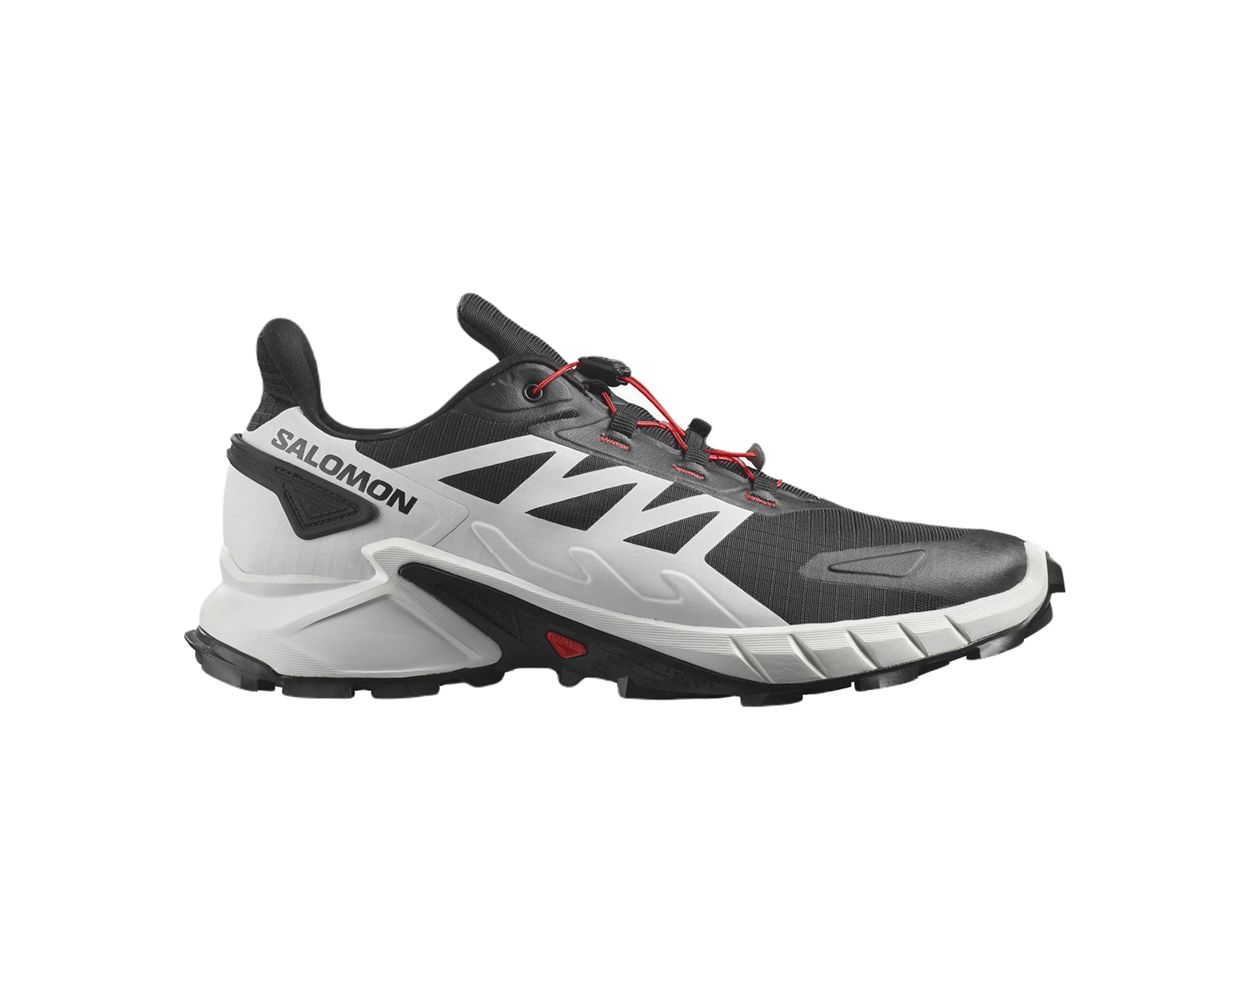 Salomon Supercross 4 Men's Trail Running Shoes in Black/White/Fiery Red |  NEON Canada